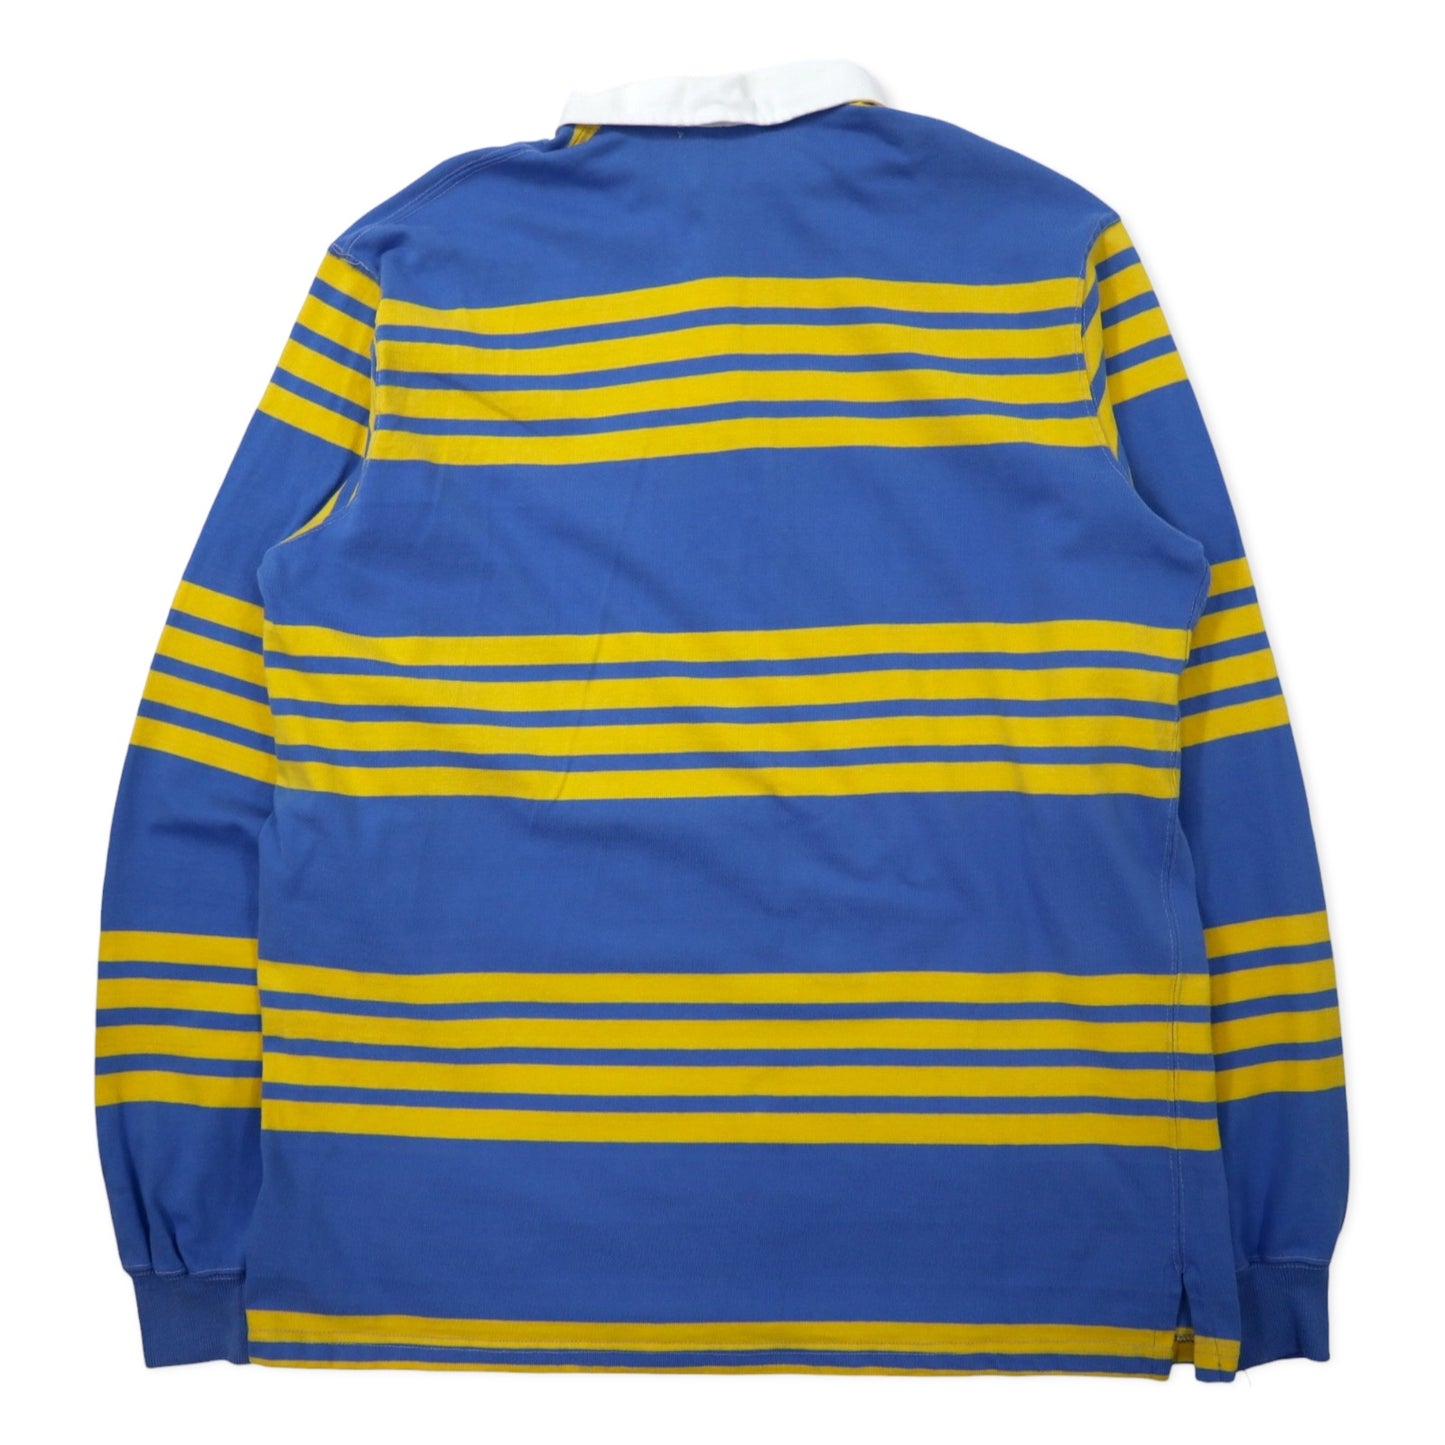 Polo by Ralph Lauren USA製 ボーダー ラガーシャツ L ブルー イエロー コットン スモールポニー刺繍